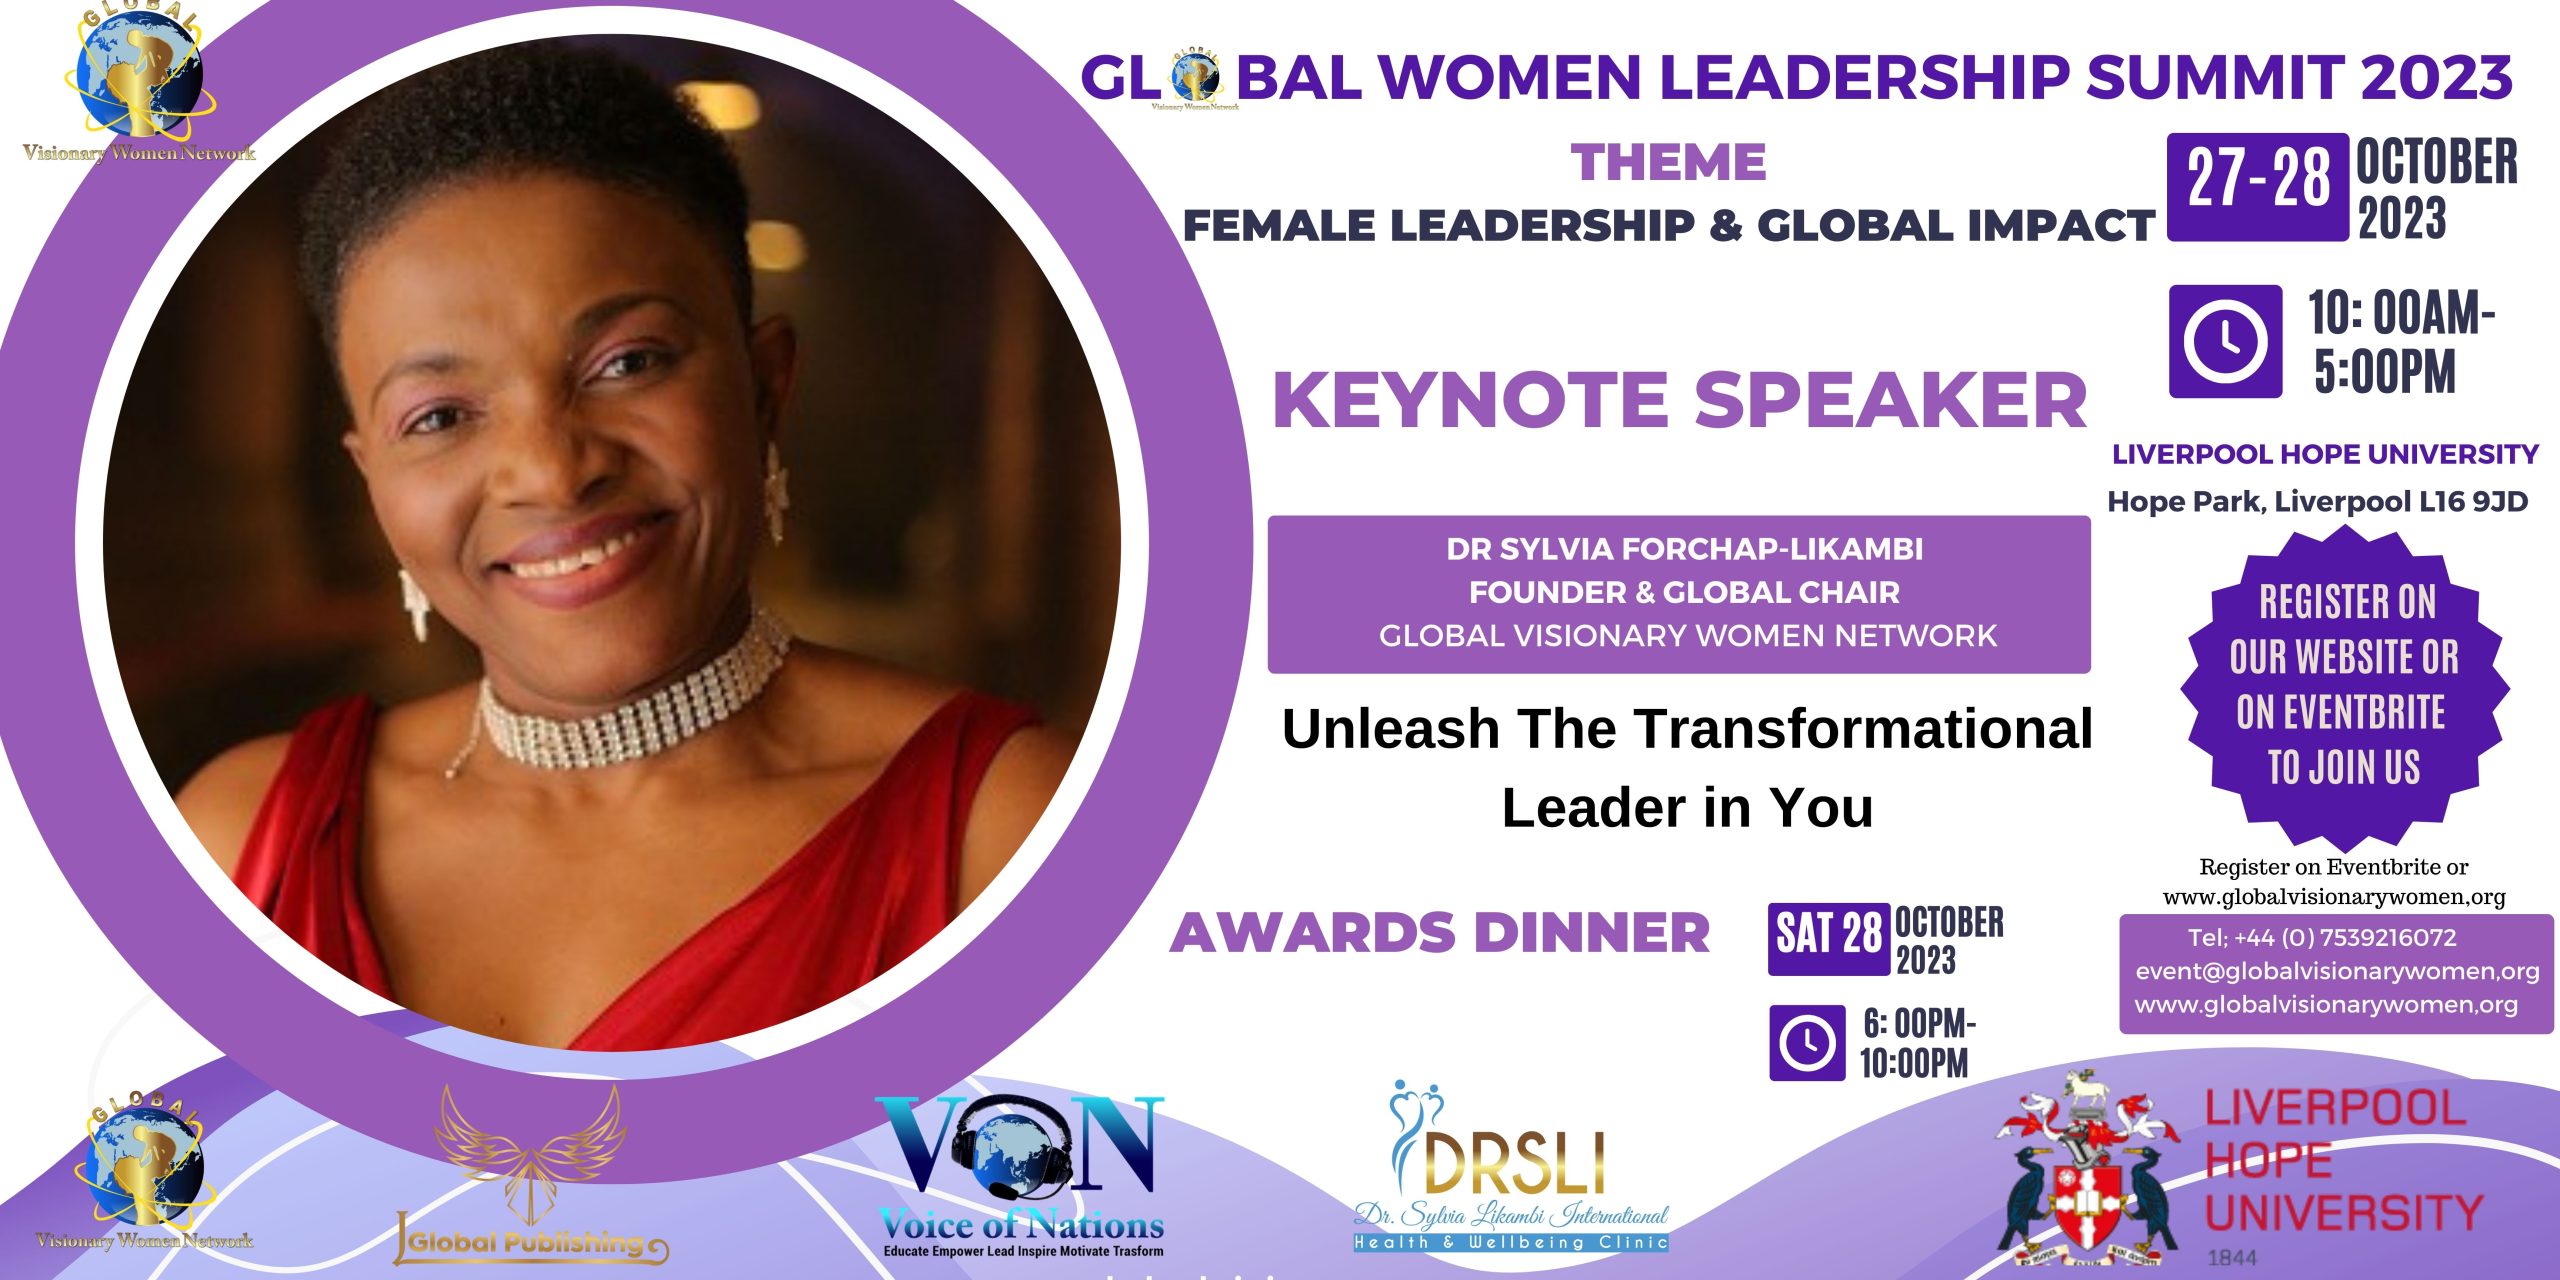 PRESS RELEASE: INFLUENTIAL FEMALE LEADERS & VISIONARIES CONVENE IN  LIVERPOOL TO FOSTER FEMALE LEADERSHIP & CREATE GLOBAL IMPACT |  globalvisionarywomen.org